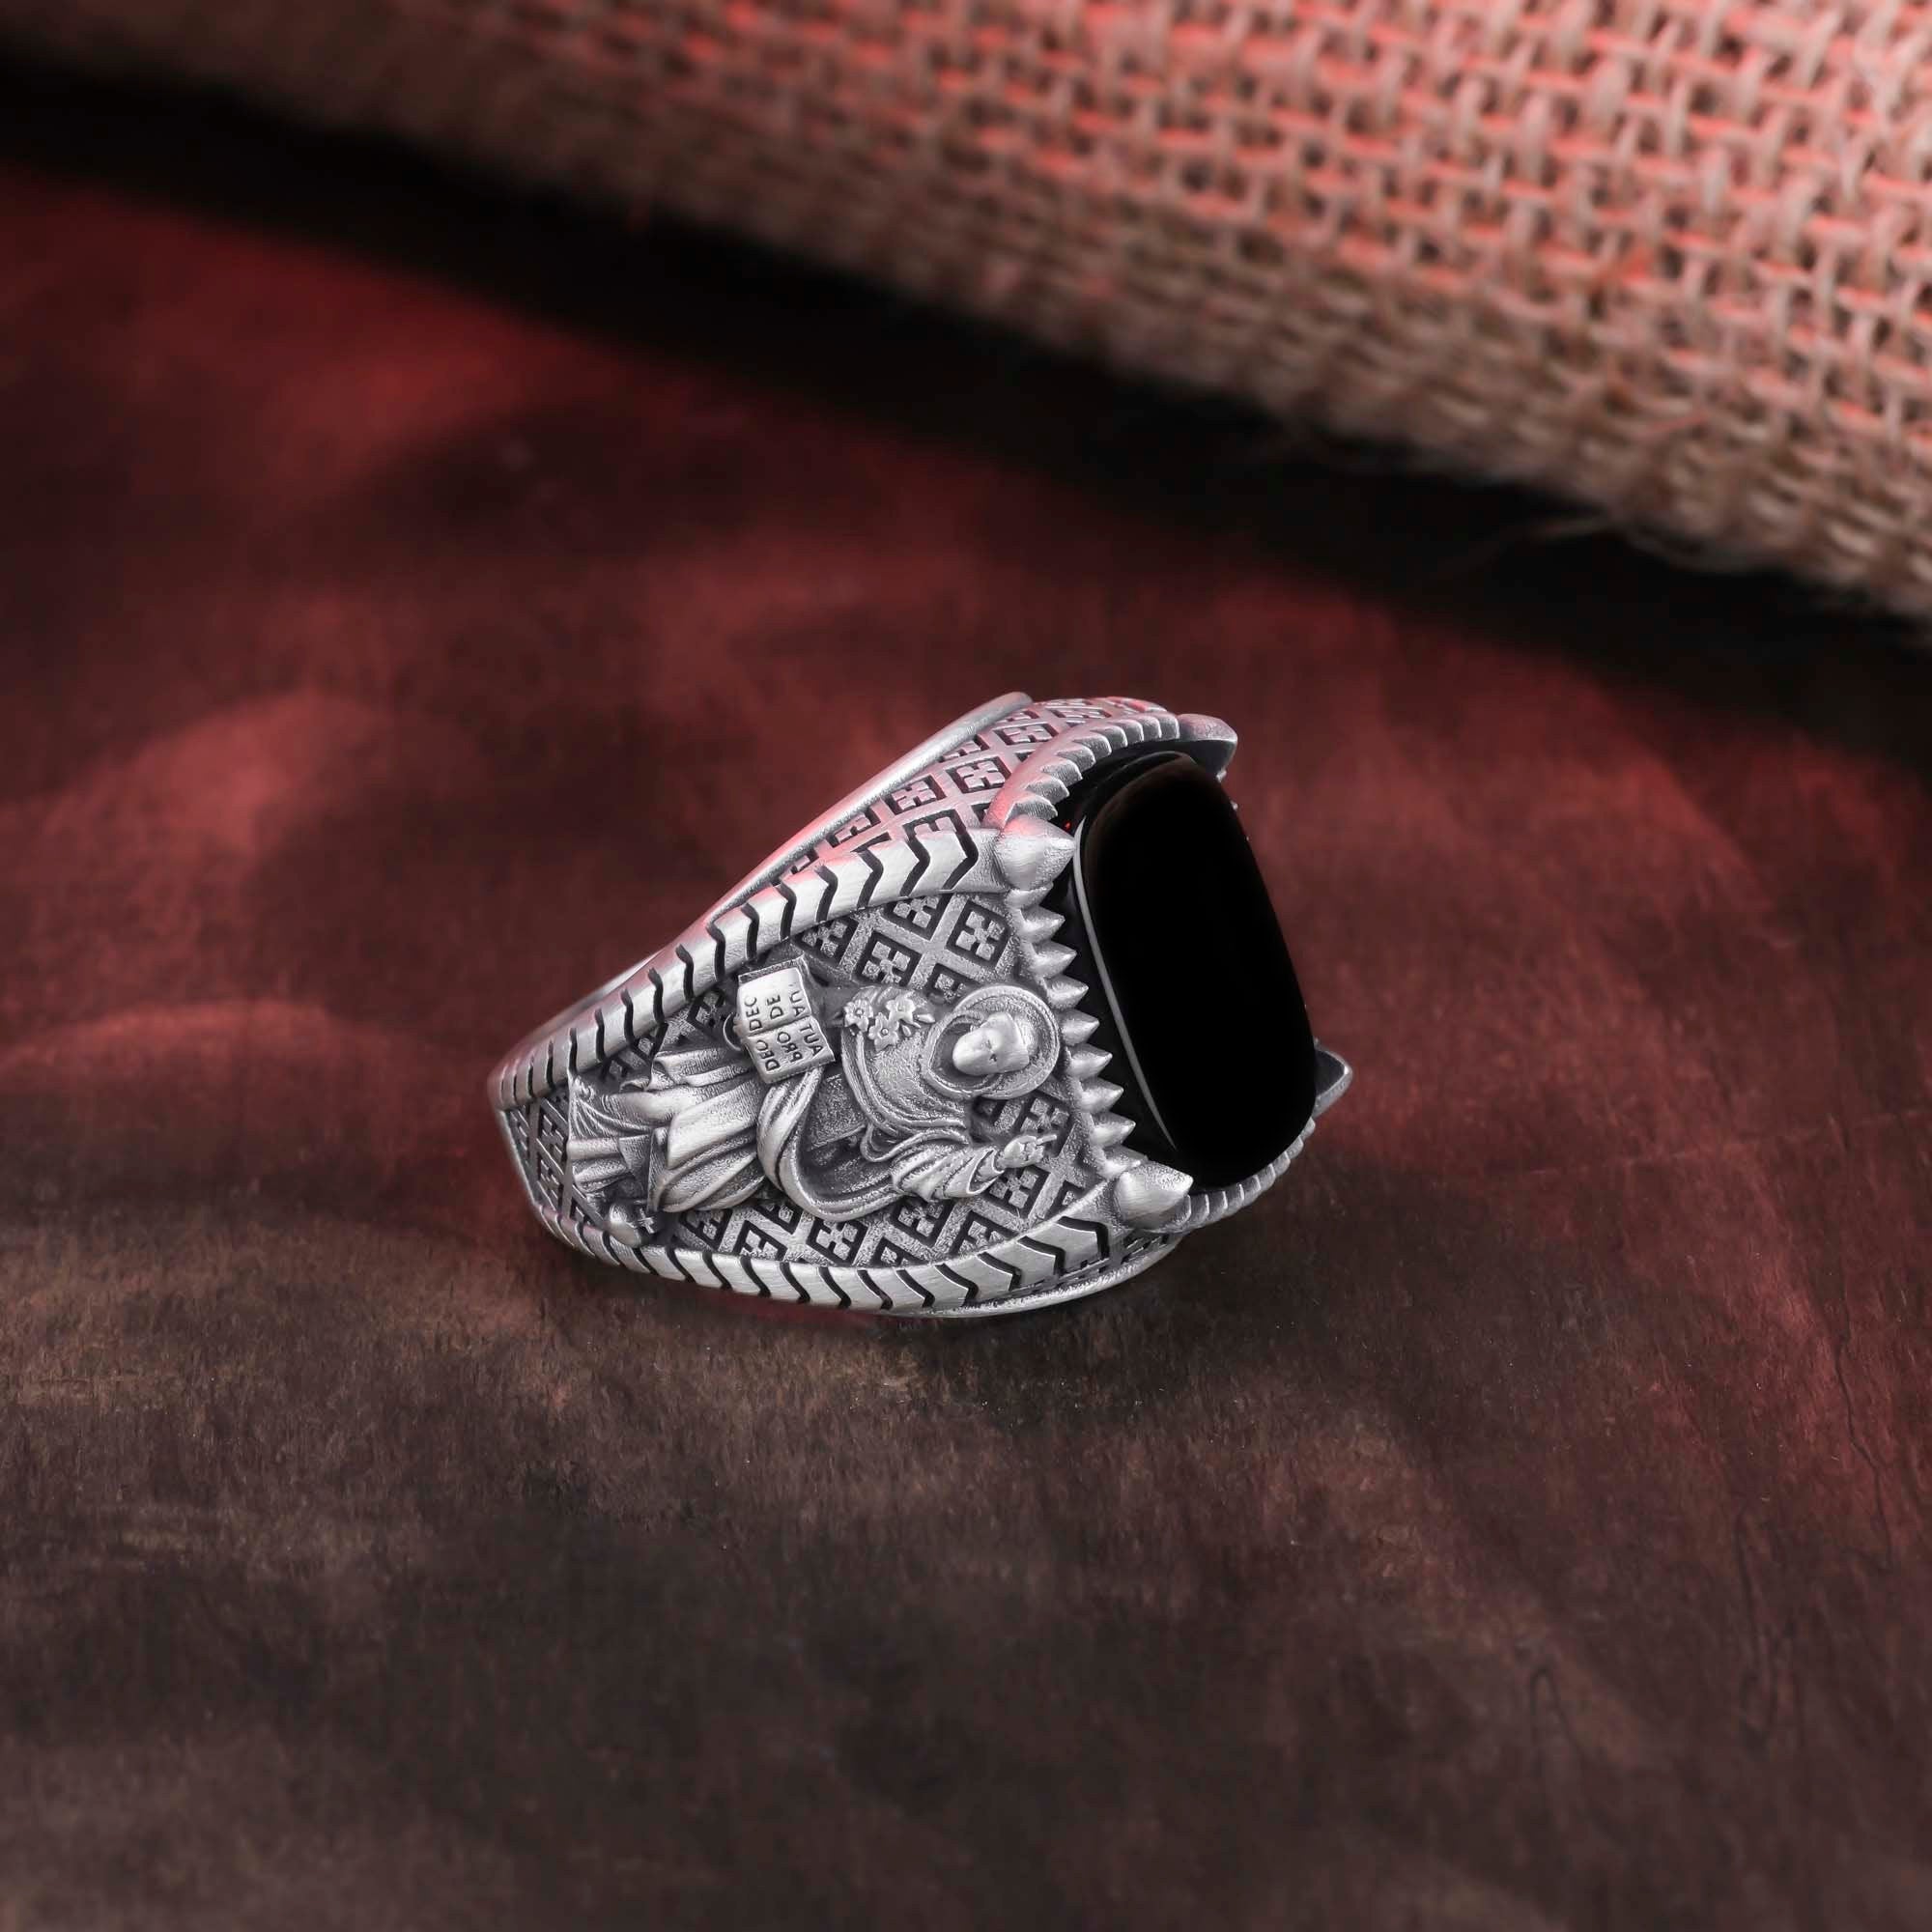 Saint Dominic Ring, Religious Gift, Christian Jewelry, Gemstone Ring, Onyx Ring, Red Agate Ring, Tiger's Eye Ring, Lapis Lazuli Ring